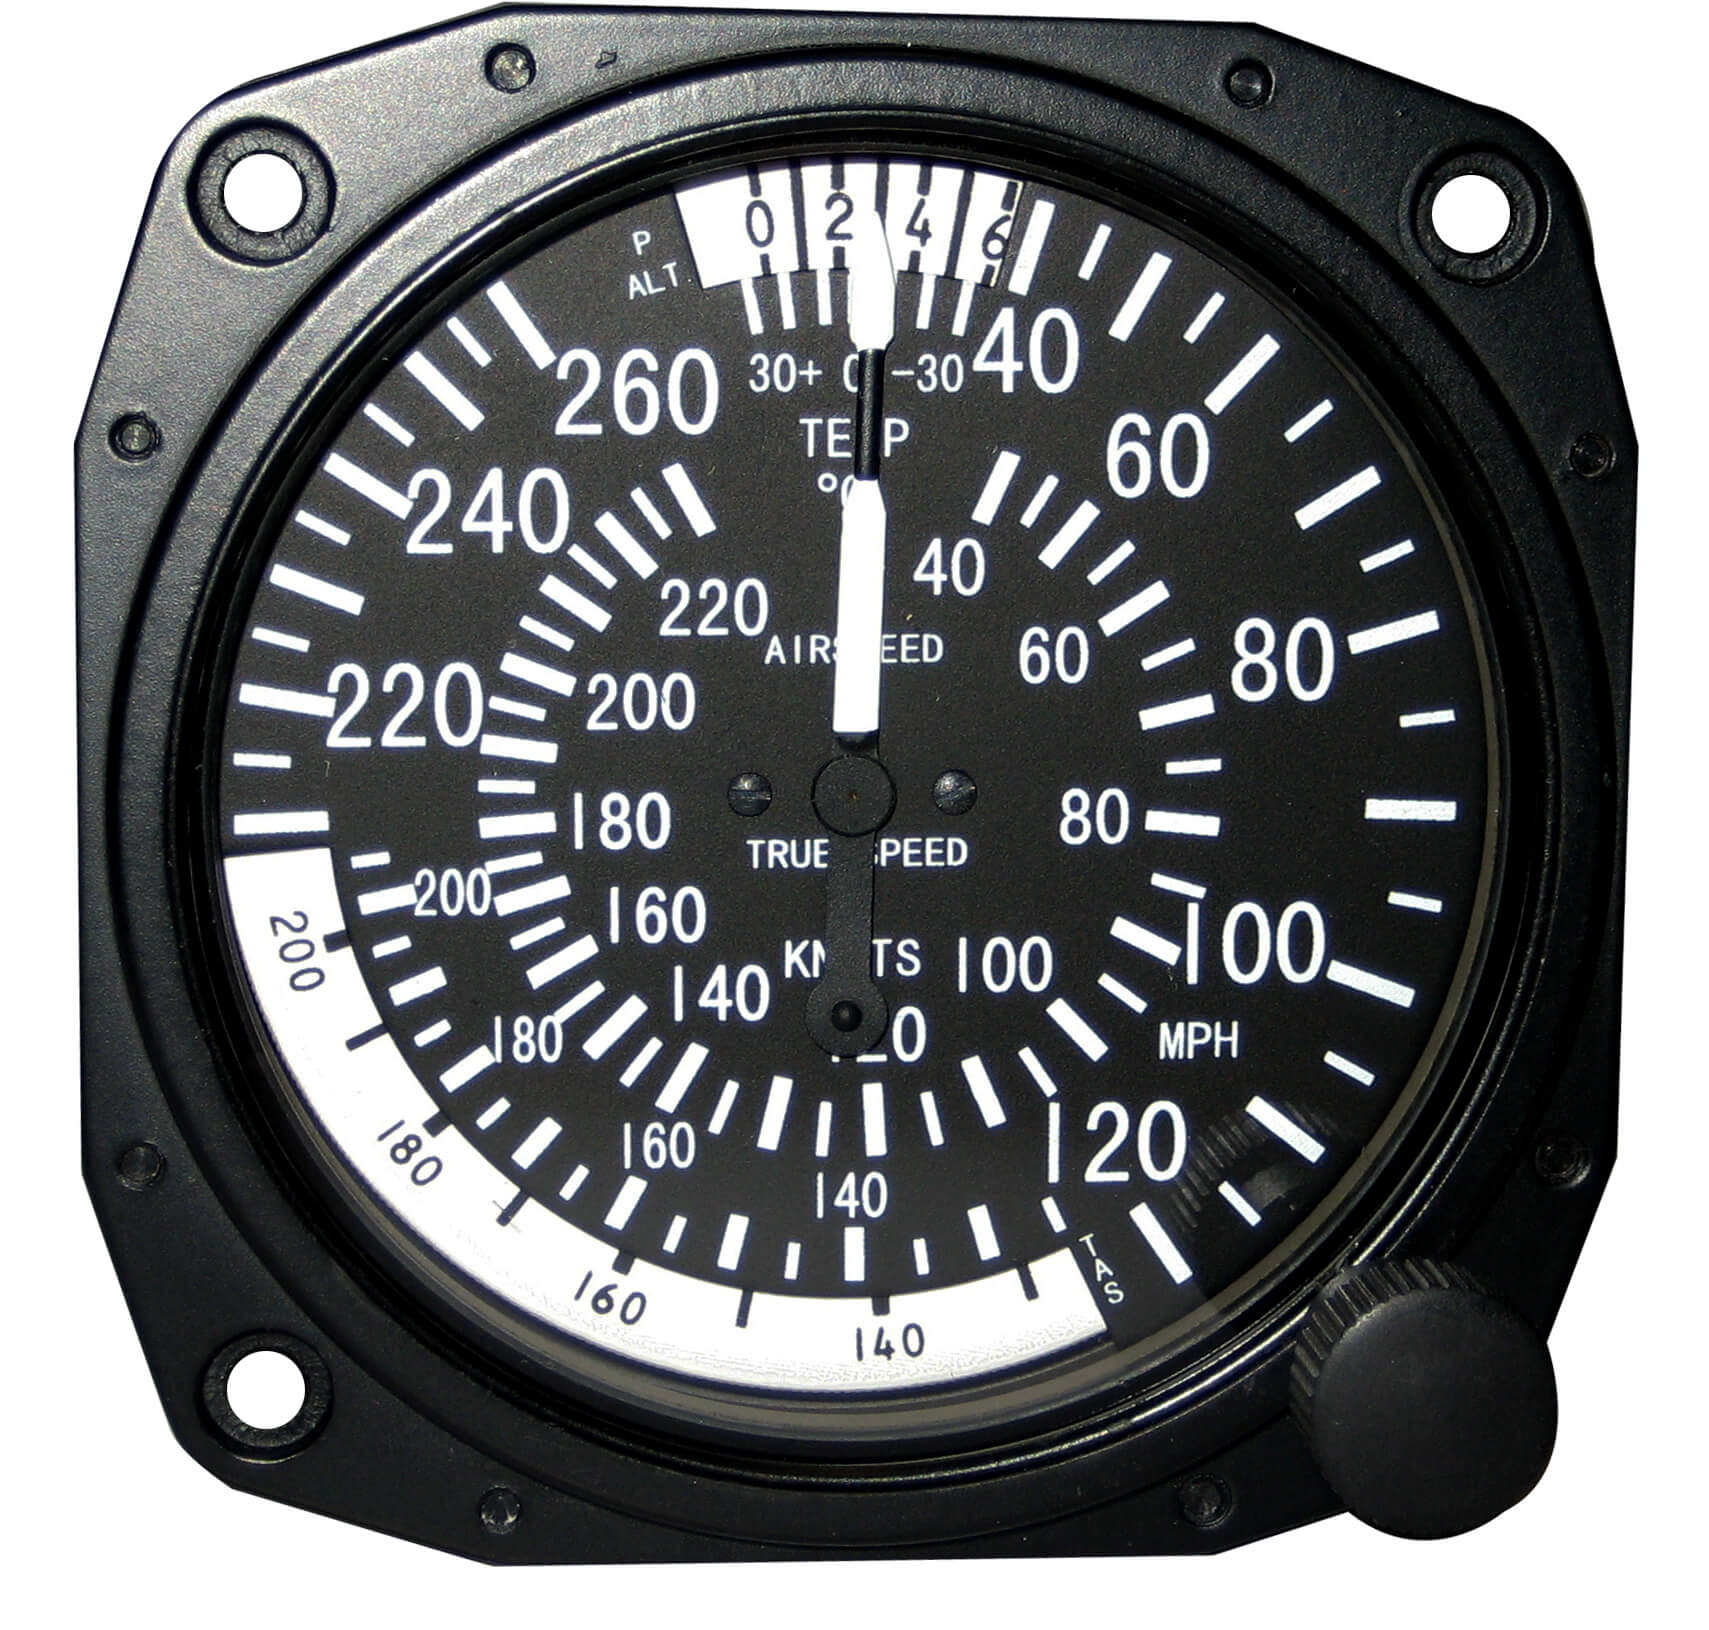 Скорость самолета 240. Airspeed indicator 20-160. ASX 2 Altimeter Airspeed indicator. "Honeywell Ah-220 Airspeed indicator". Cessna Airspeed indicator.